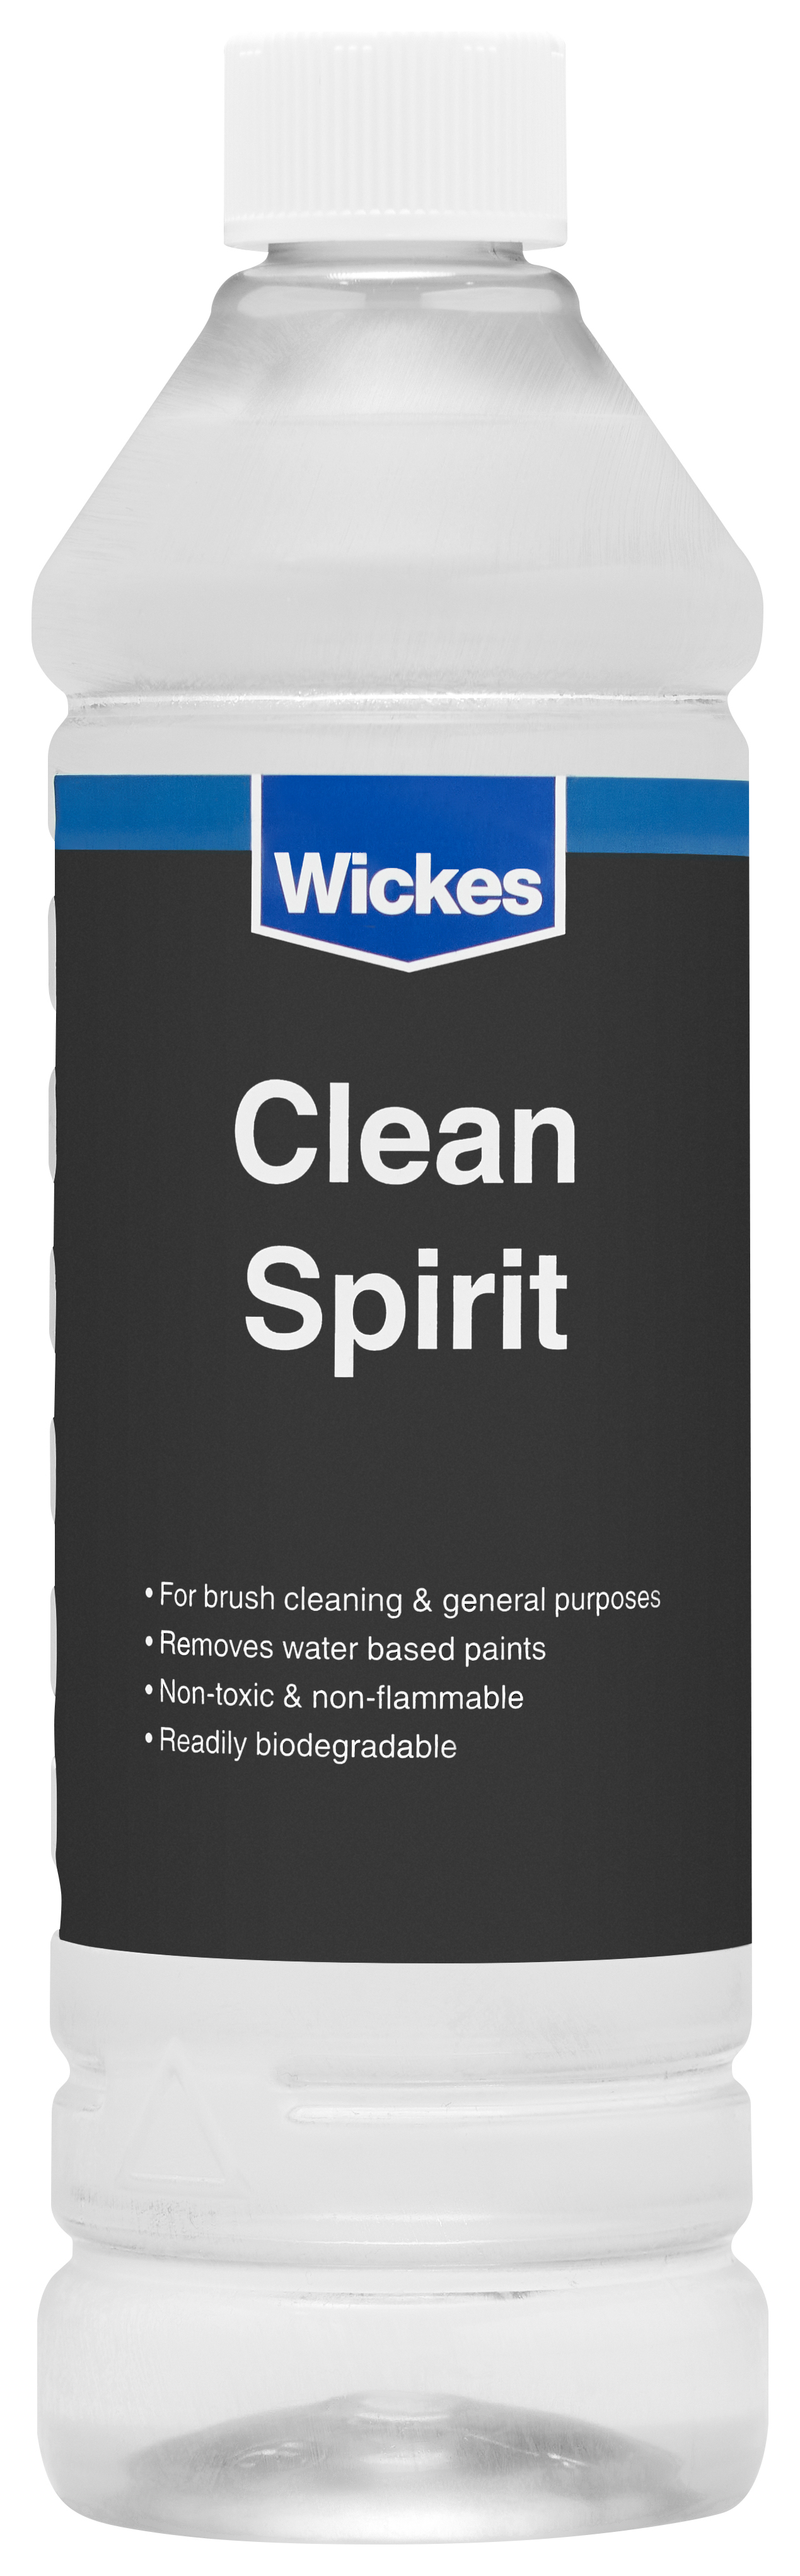 Image of Wickes Non-Toxic Clean Spirit - 750ml